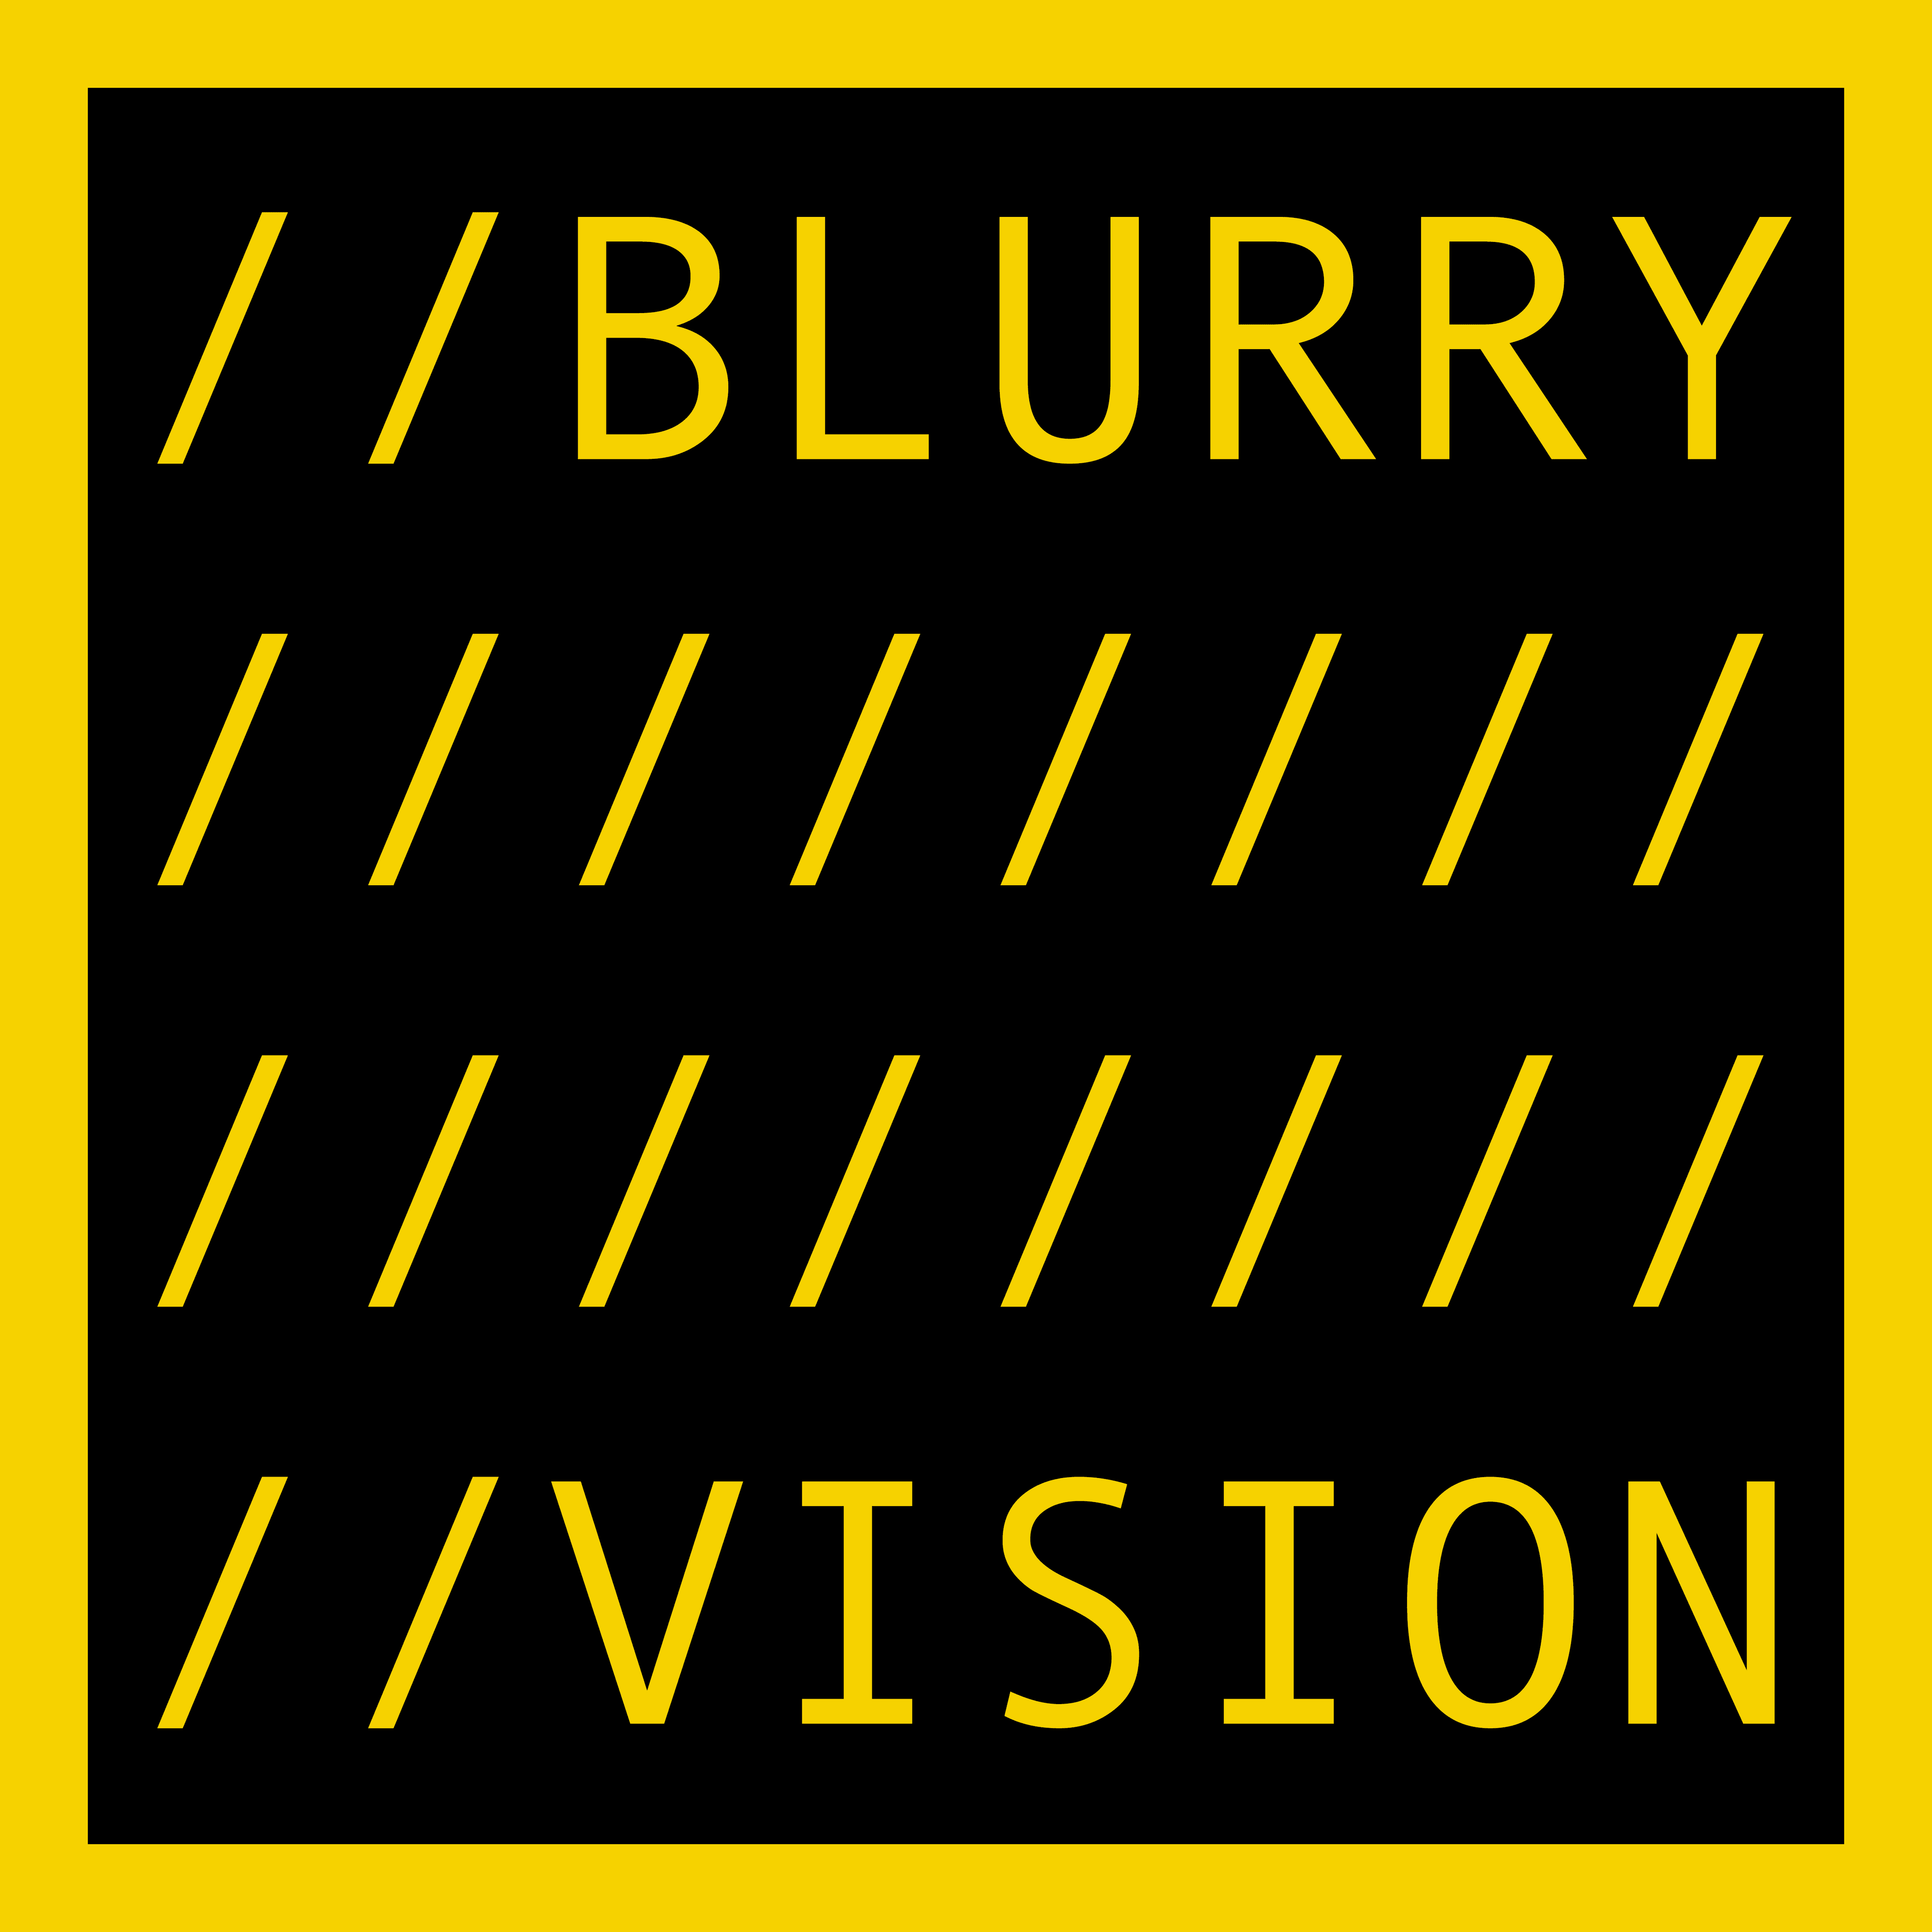 BLURRY VISION